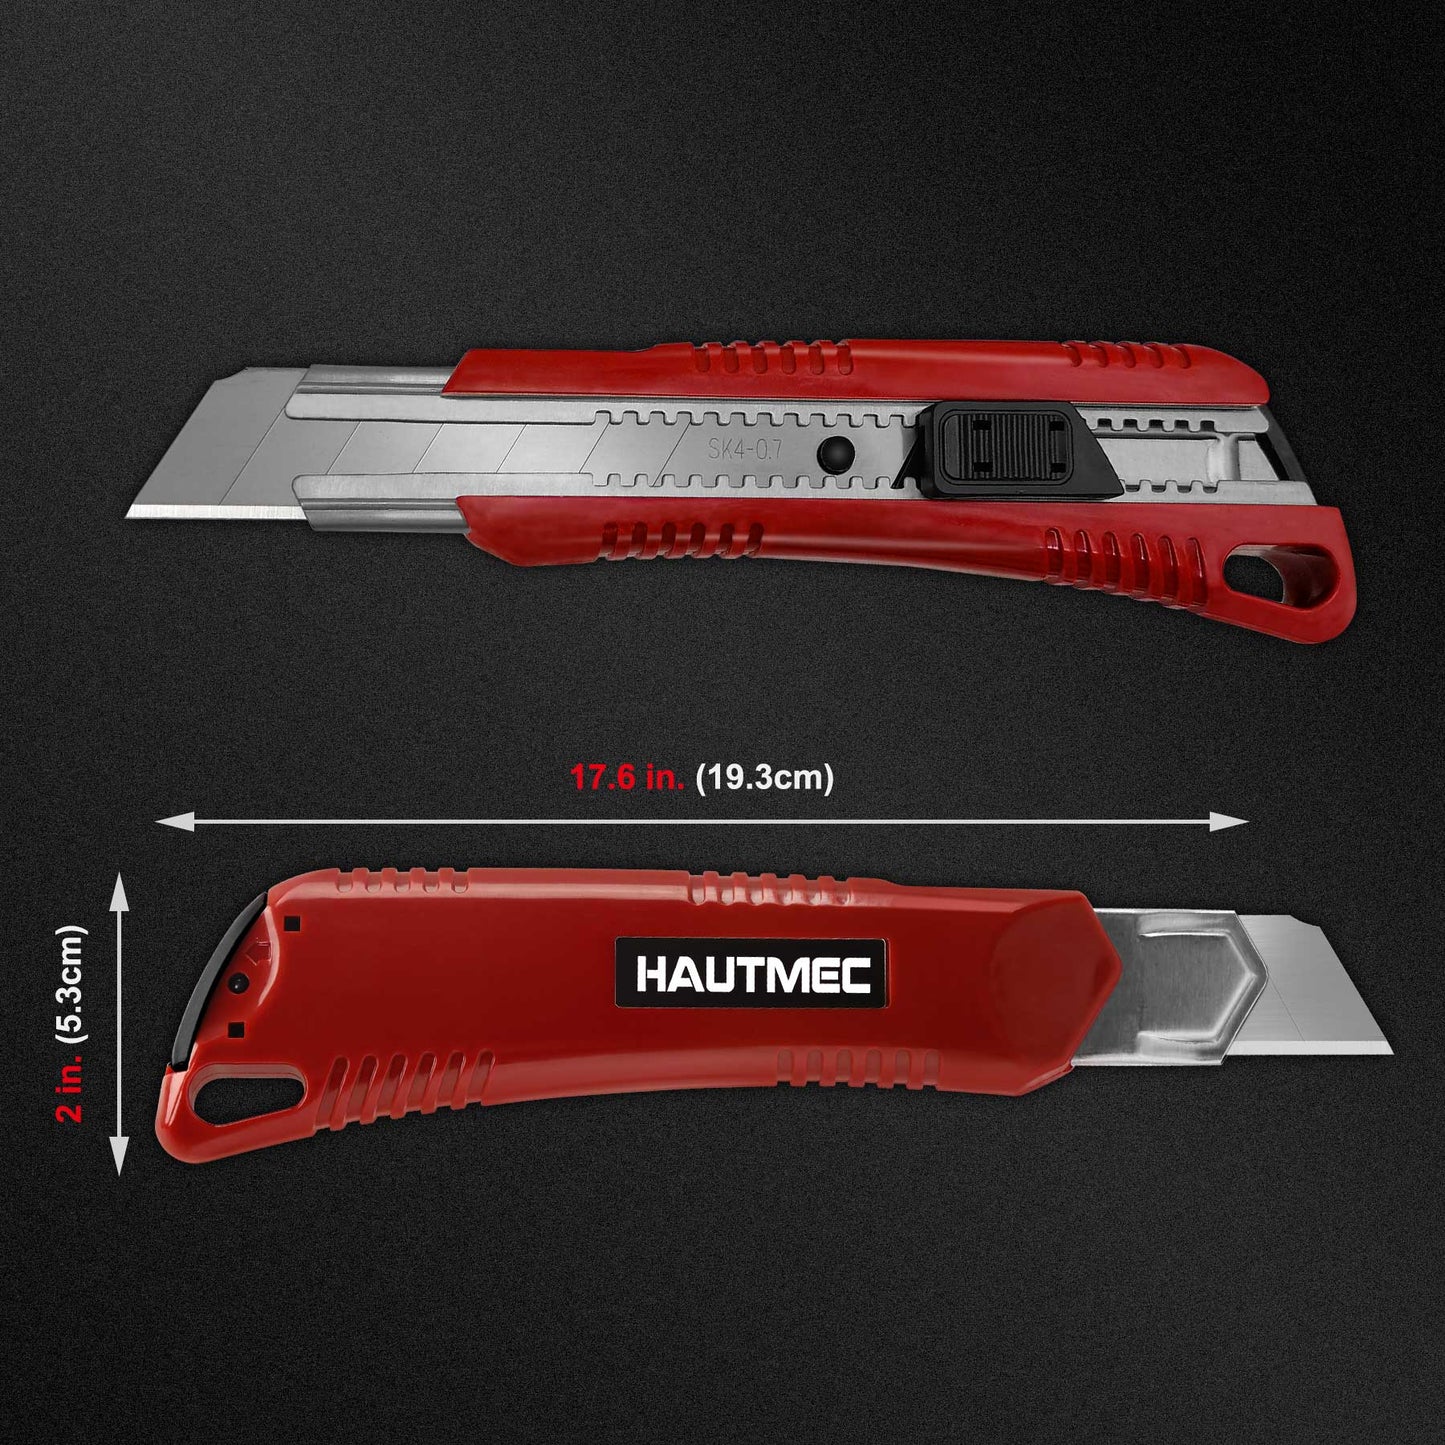 HAUTMEC 10PCS 25mm Extra Heavy-Duty SK4 Utility Knife, 3pcs blade Snap-off Retractable Box Cutter, Auto-lock Mechanism, Blade Storage Design HT0080-10PC